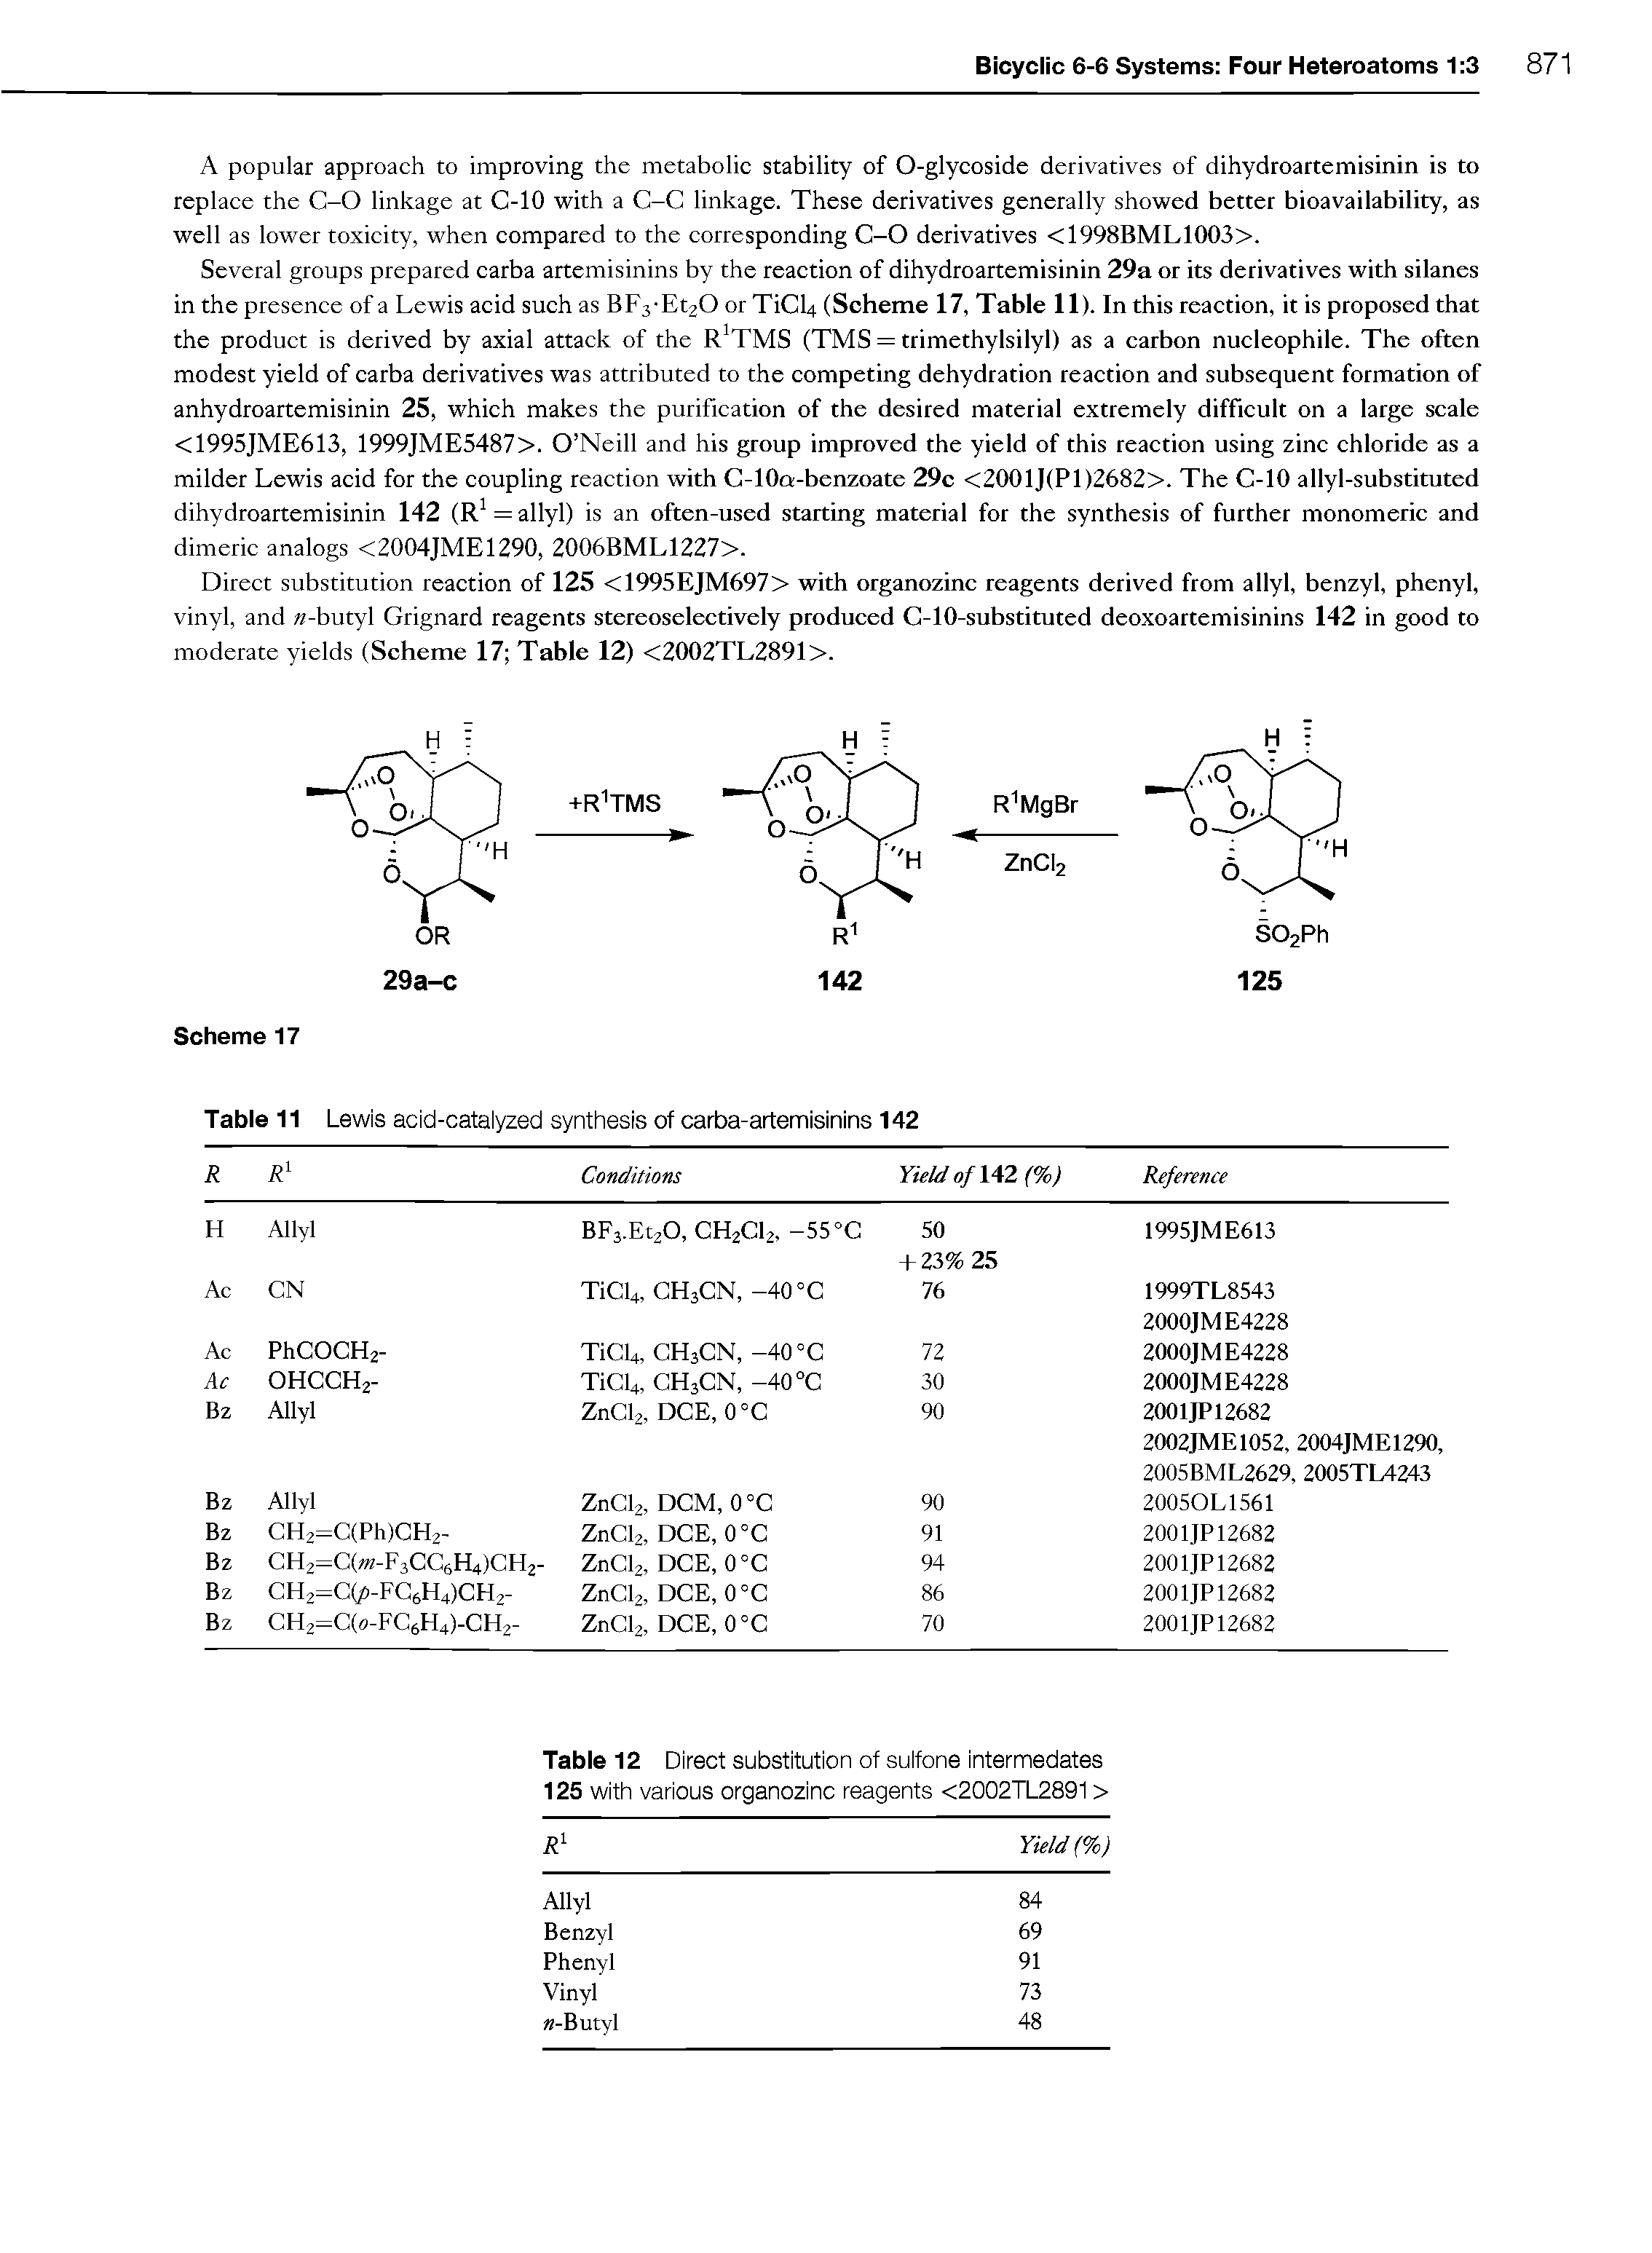 Table 11 Lewis acid-catalyzed synthesis of carba-artemisinins 142...